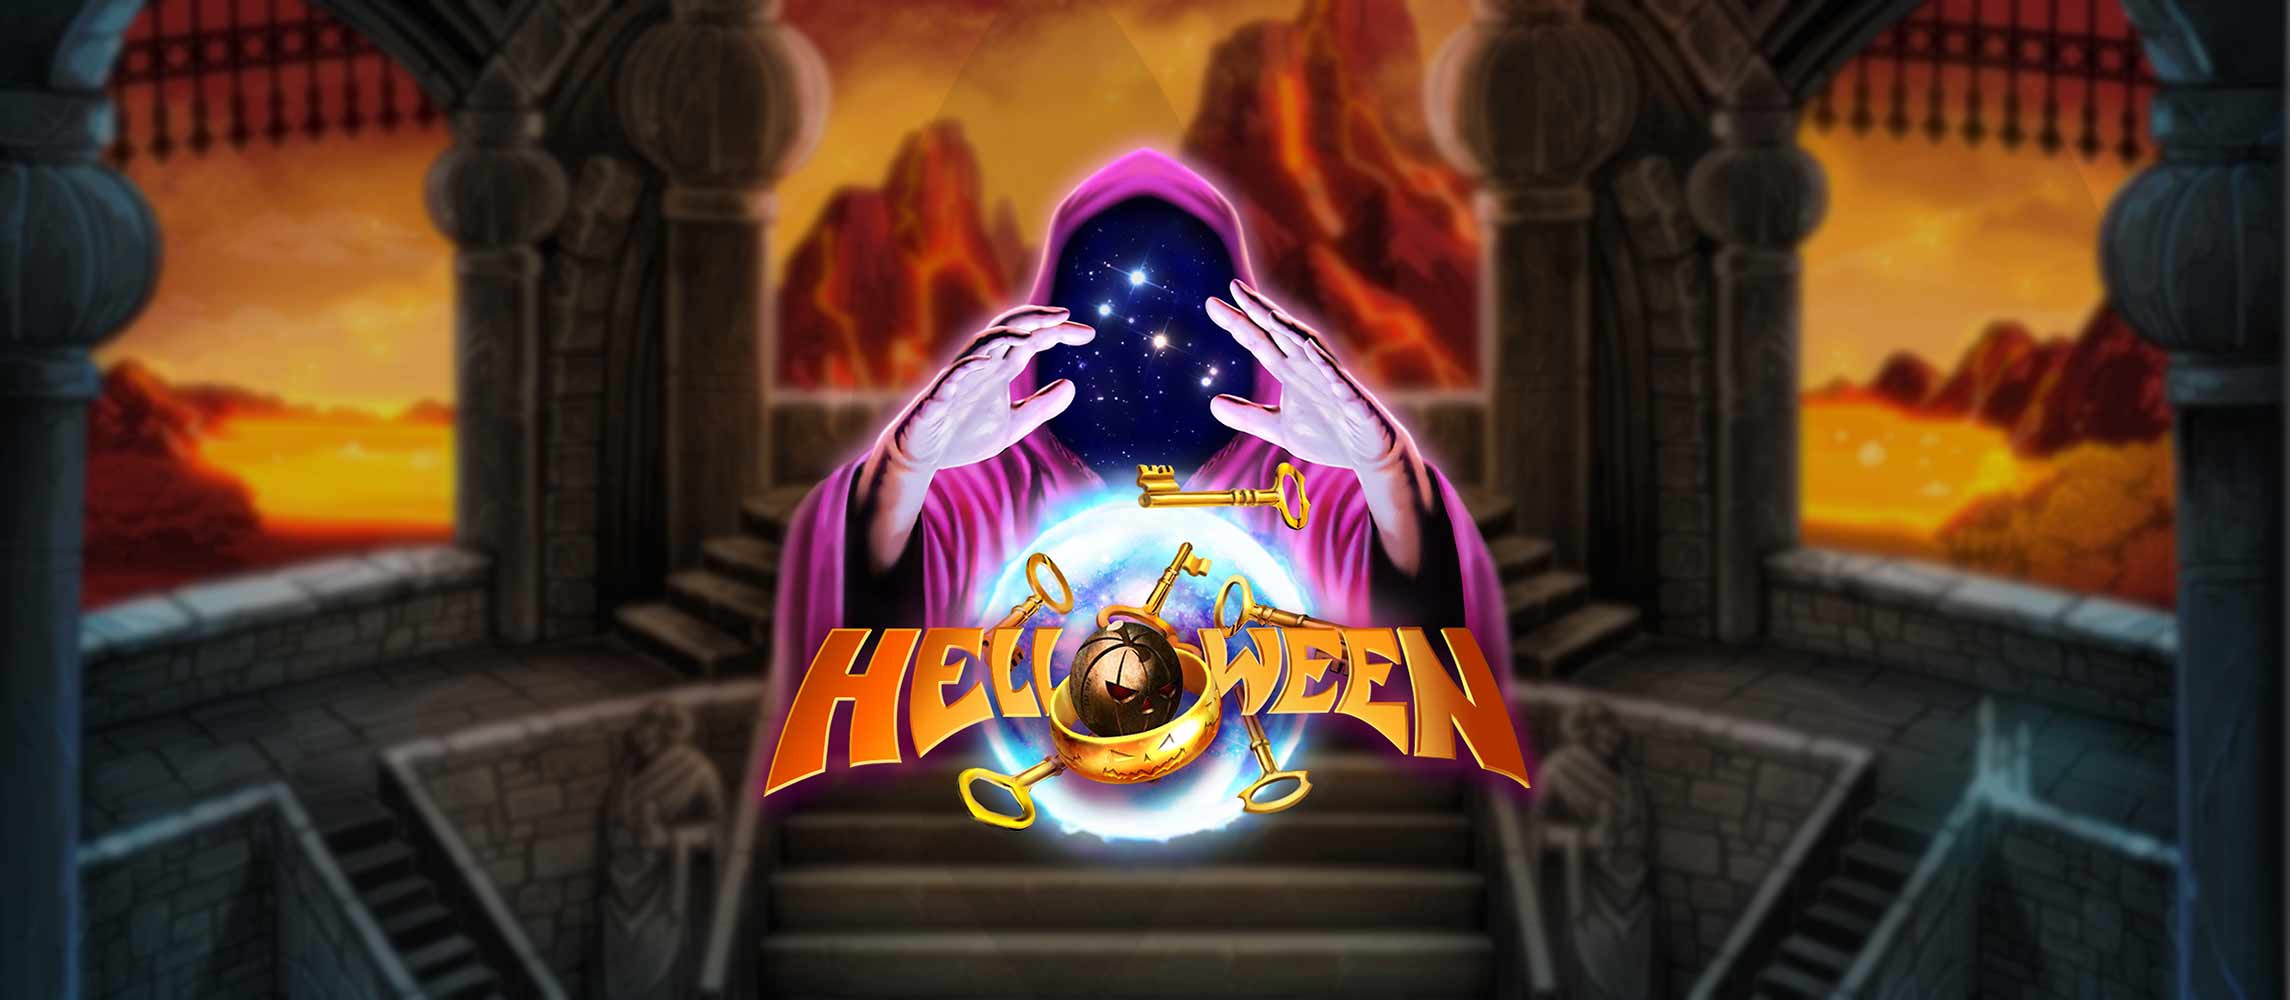 Helloween Online Slot by Play‘n GO